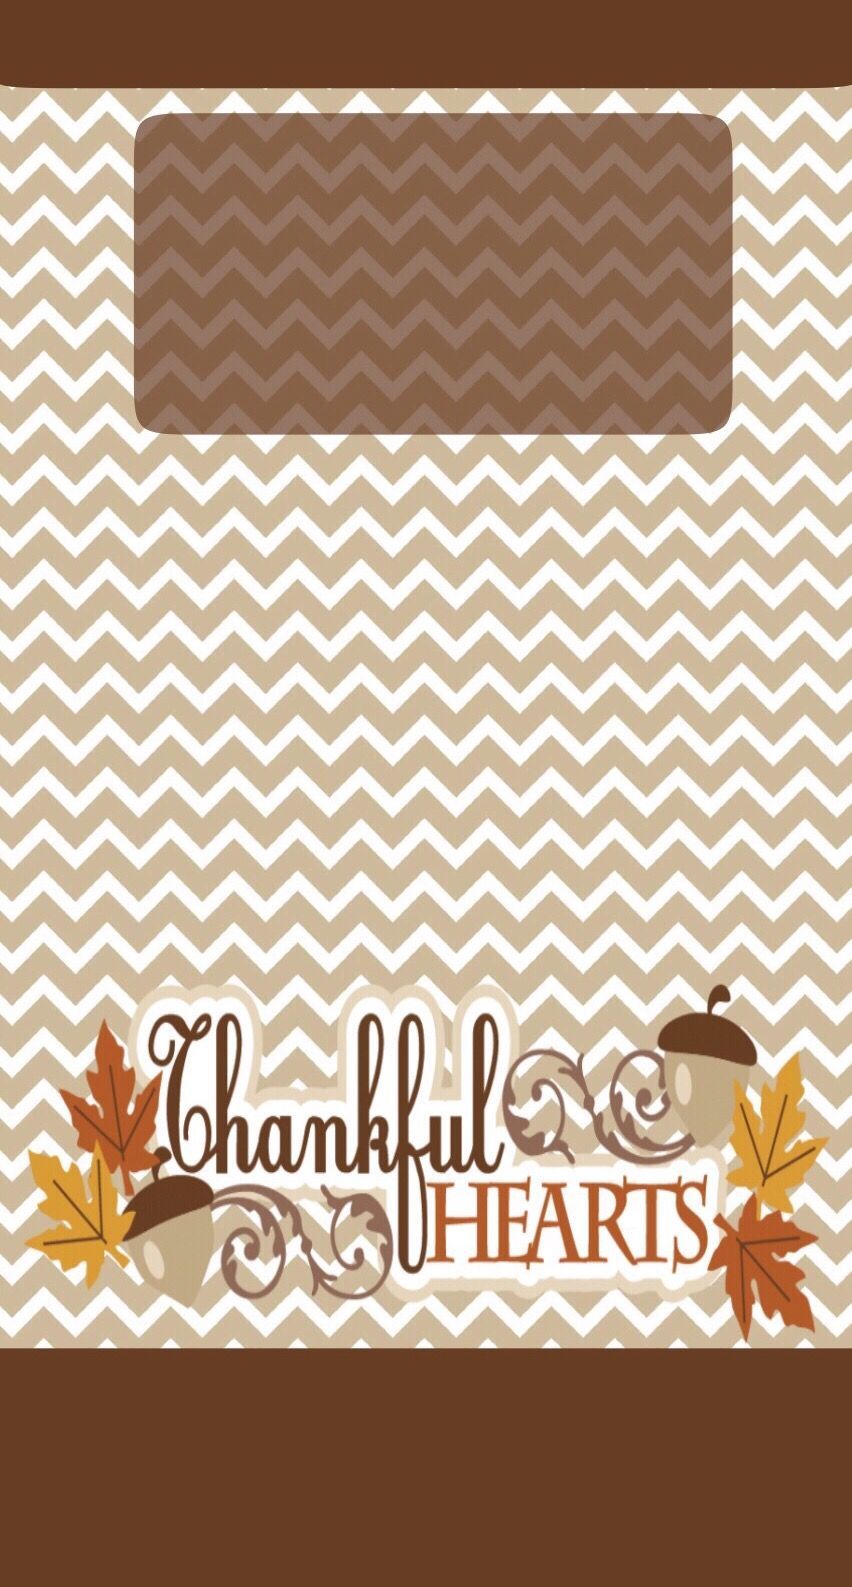 IPhone 6s Plus thanksgiving wallpaper. Thanksgiving iphone wallpaper, iPhone wallpaper pattern, Thanksgiving wallpaper